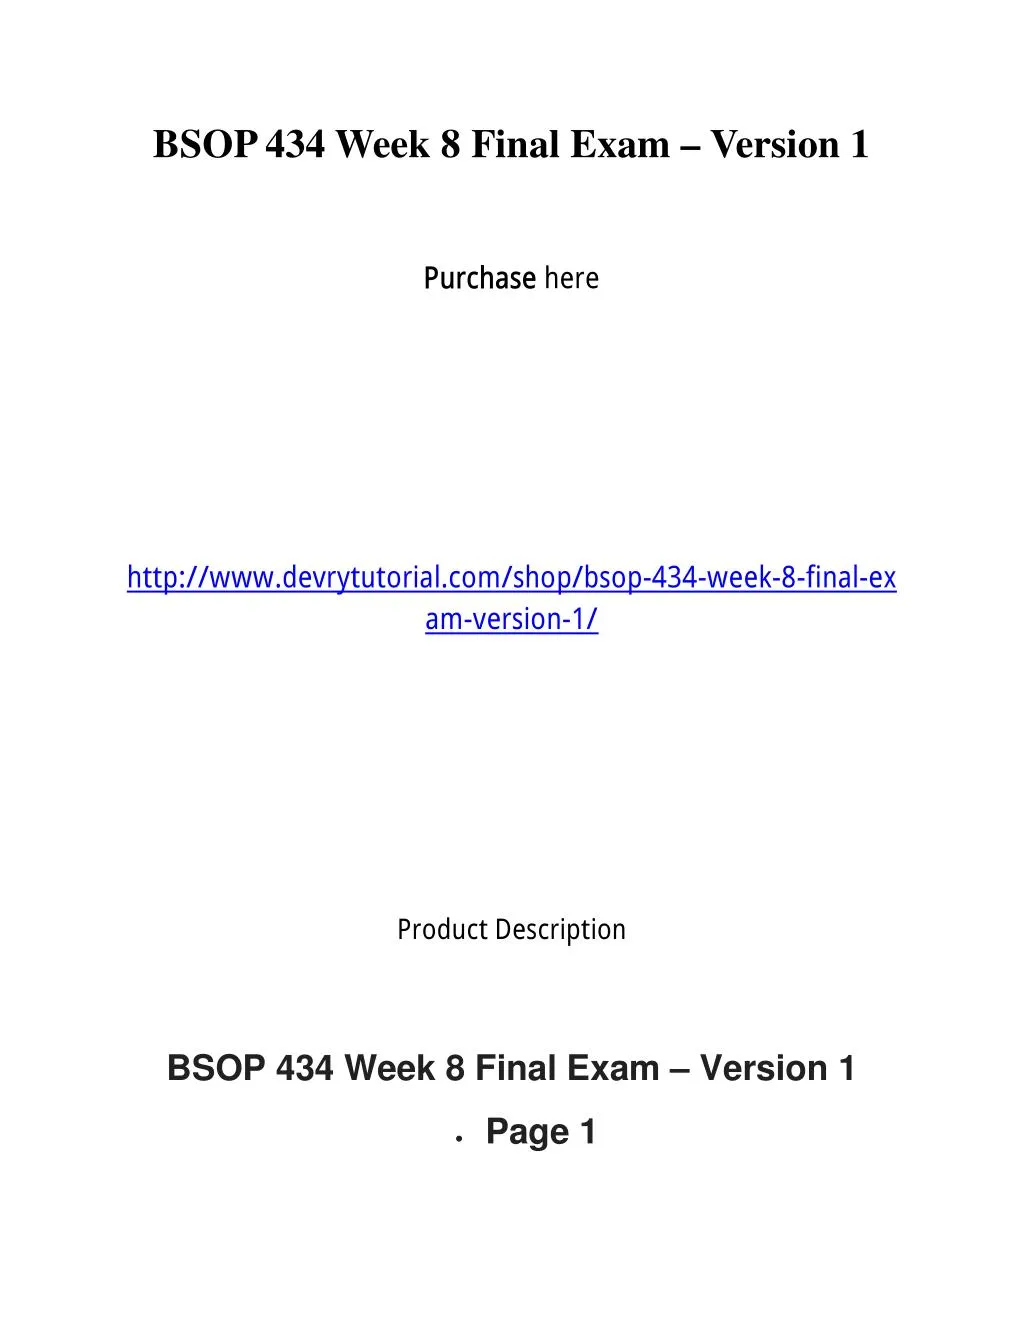 bsop 434 week 8 final exam version 1